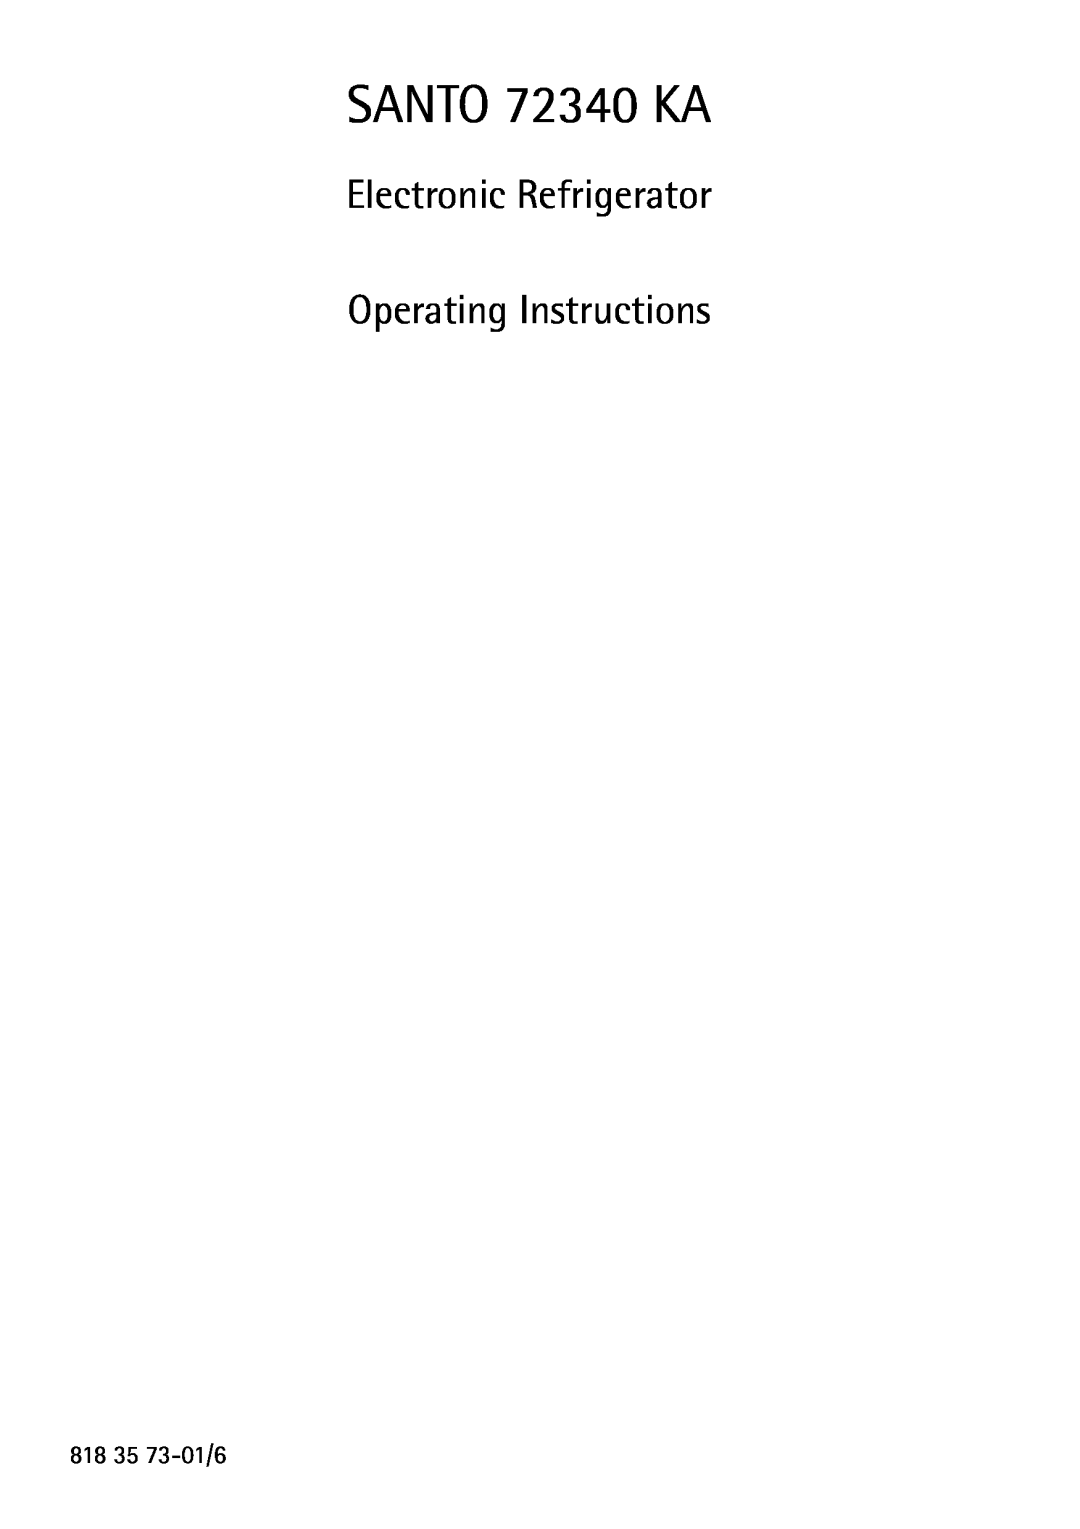 Electrolux SANTO 72340 KA operating instructions Electronic Refrigerator Operating Instructions 